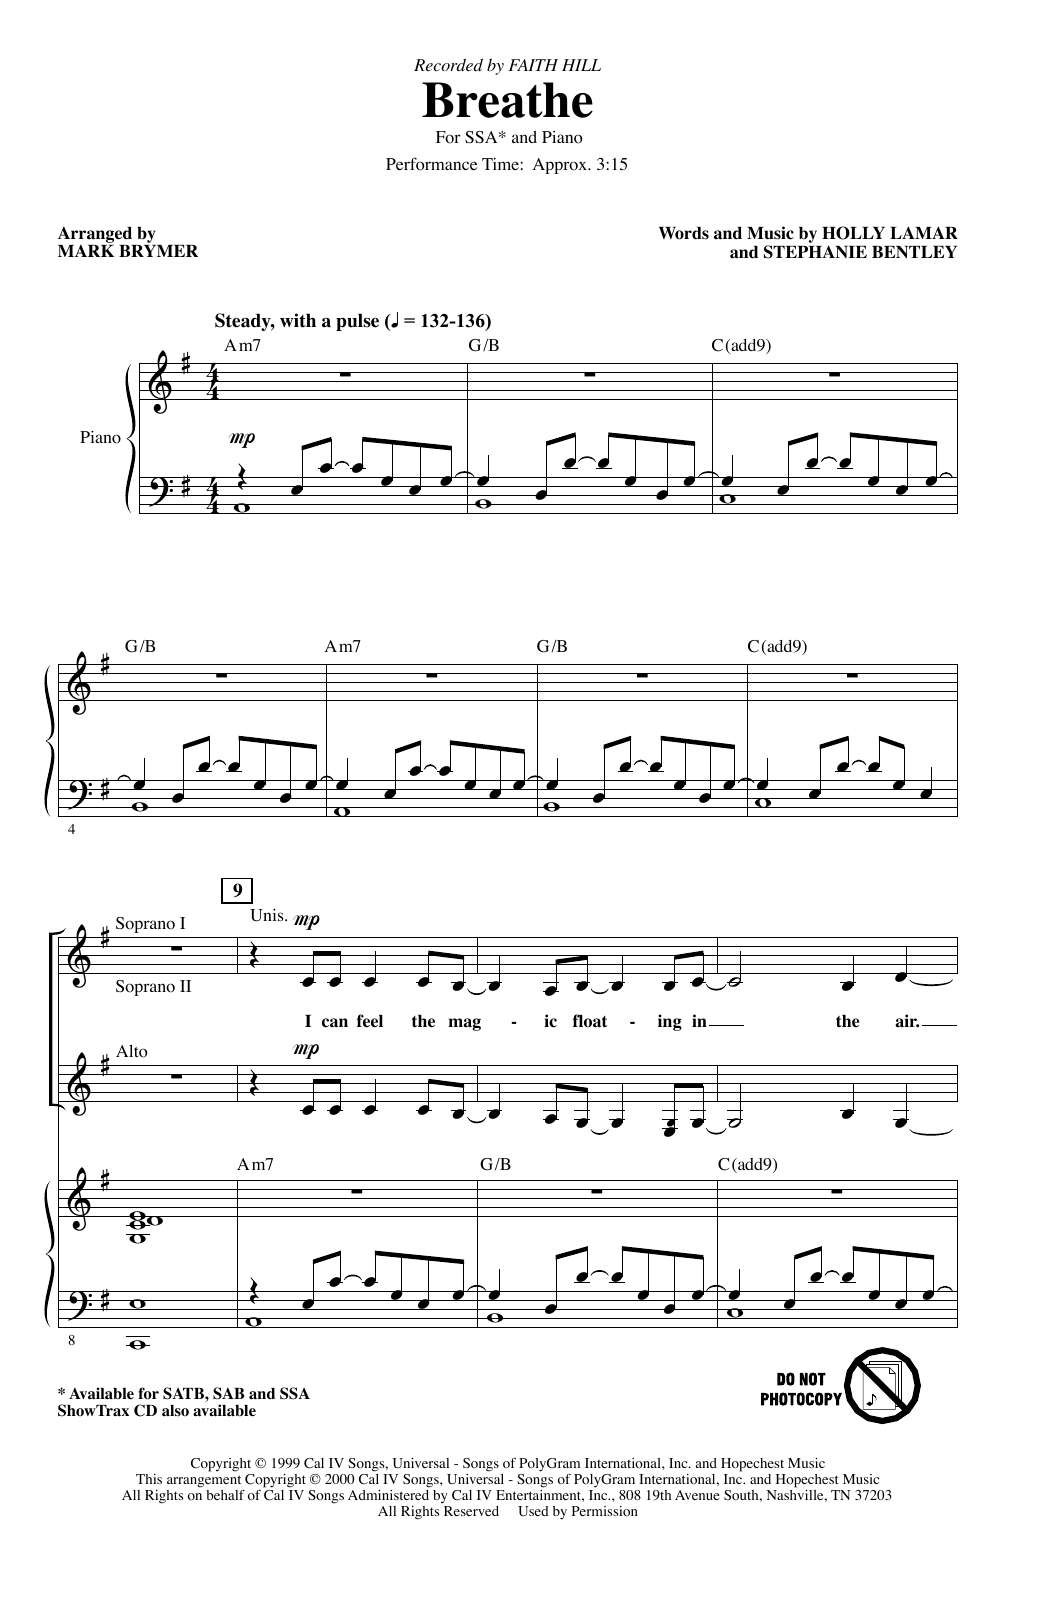 Faith Hill Breathe (arr. Mark Brymer) Sheet Music Notes & Chords for SATB Choir - Download or Print PDF